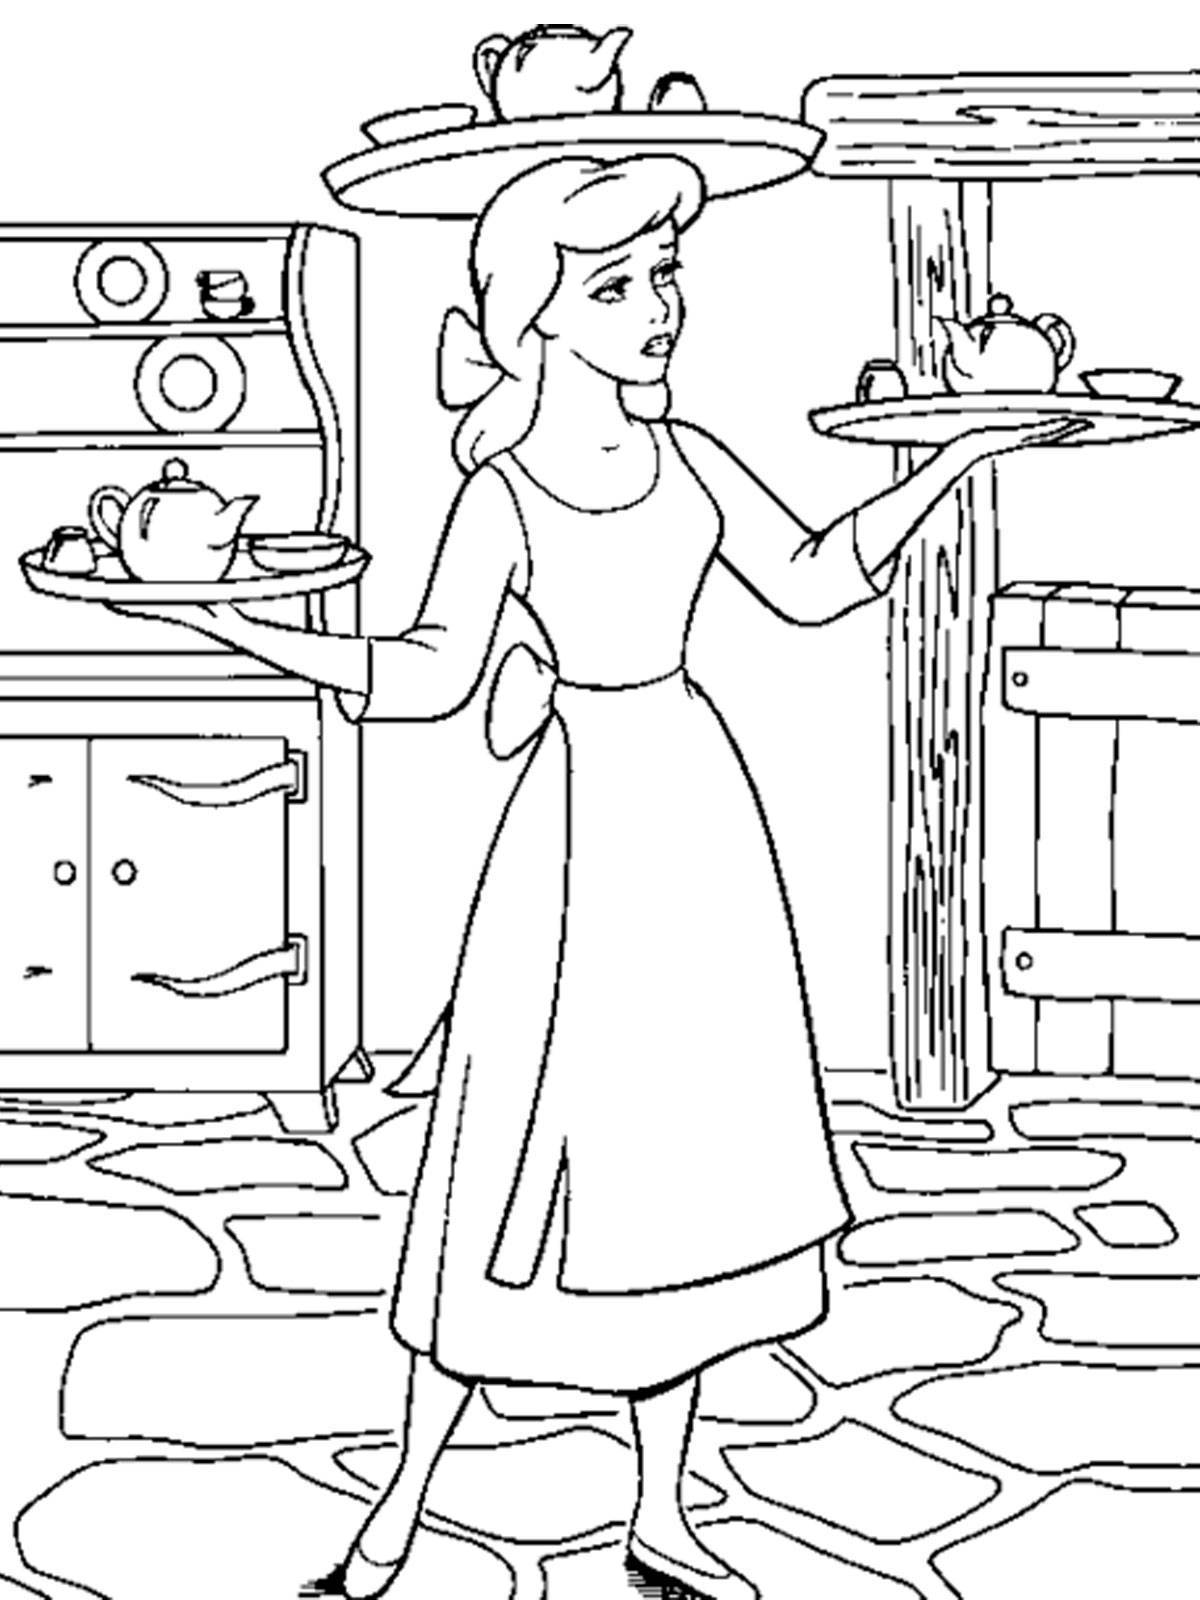 Fun Cinderella coloring book for kids